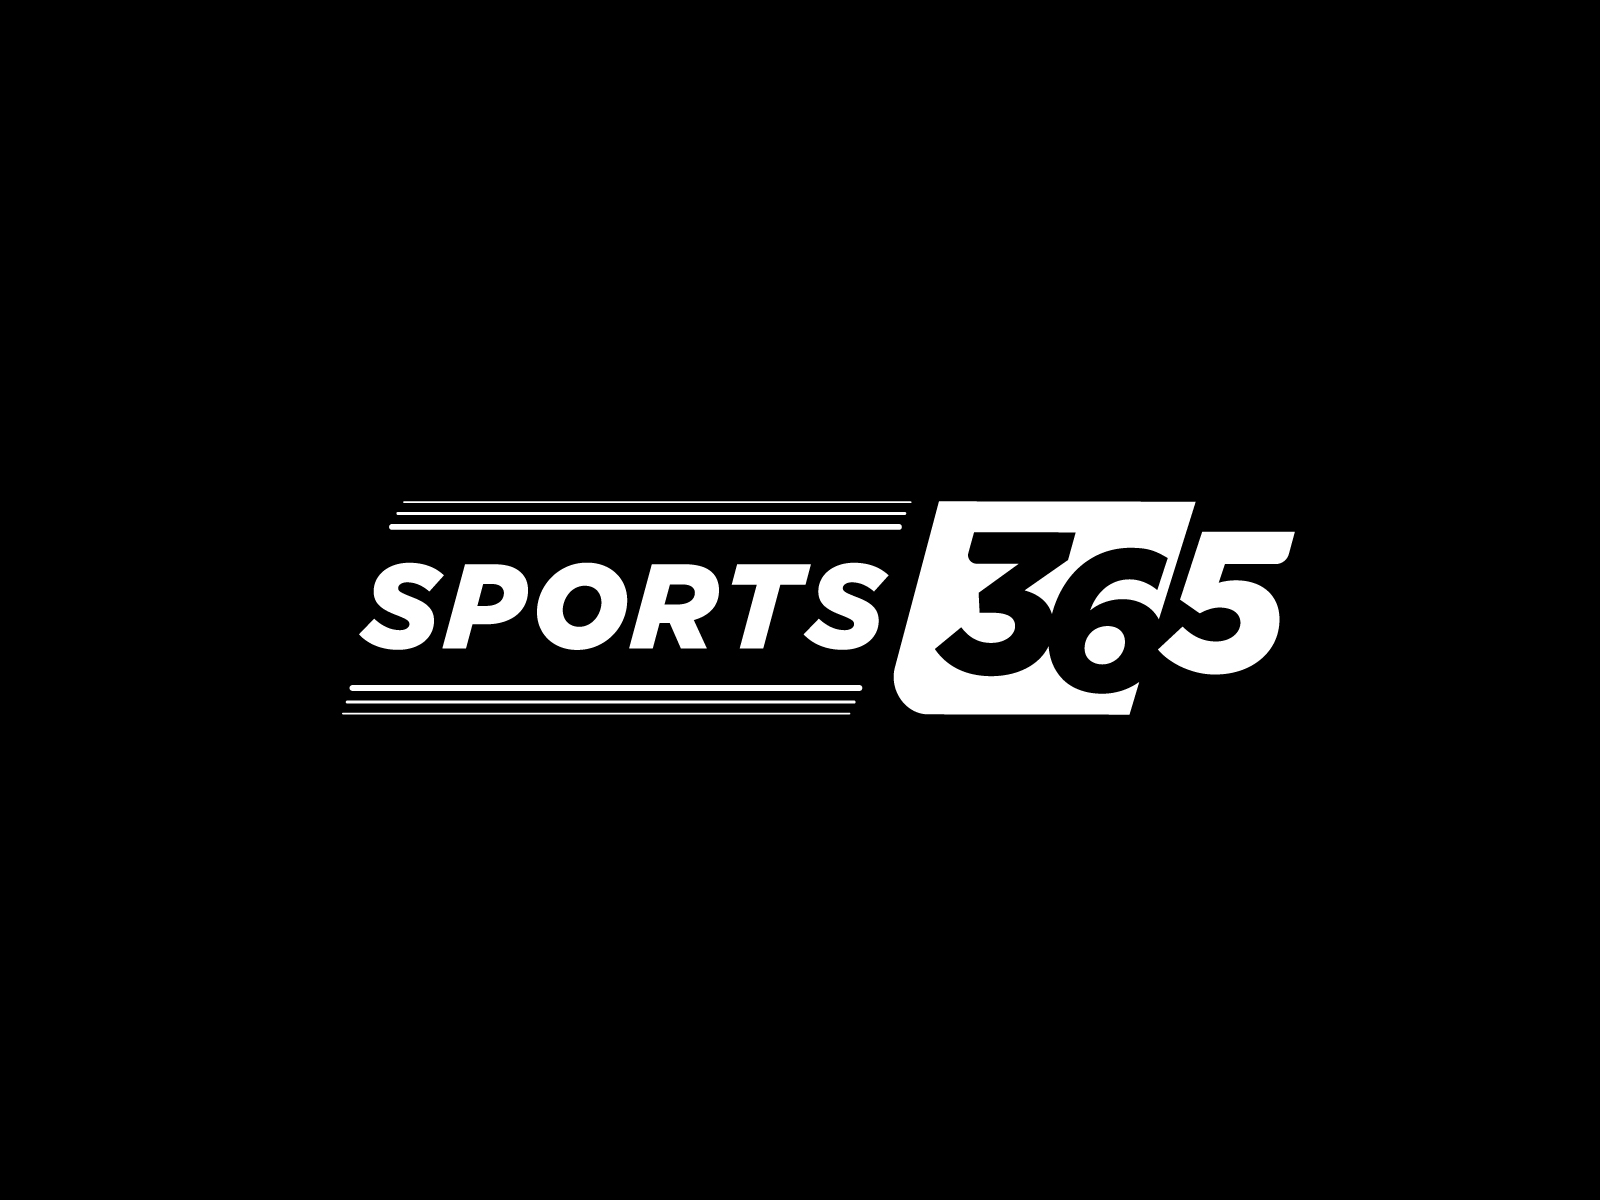 Esporte 365